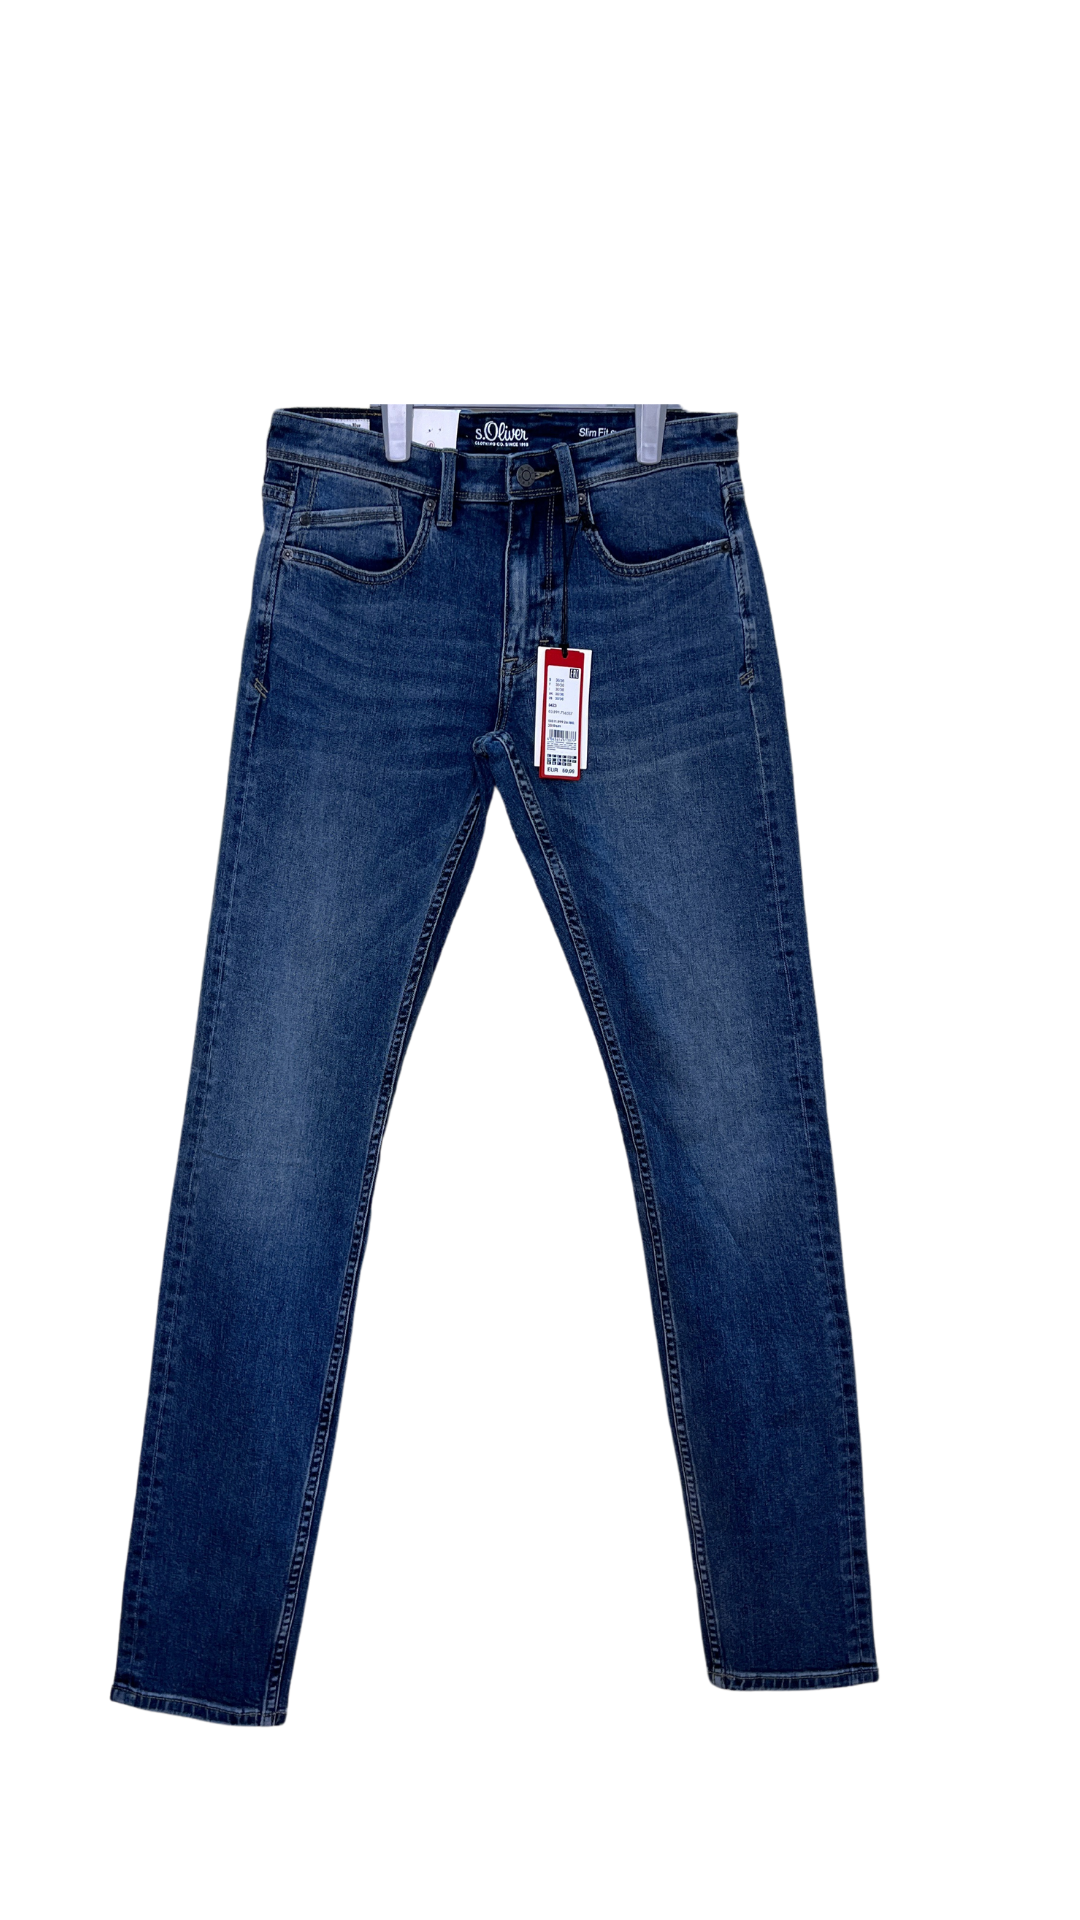 men's jeans S.oliver Dark blue Slim fit Straight jeans